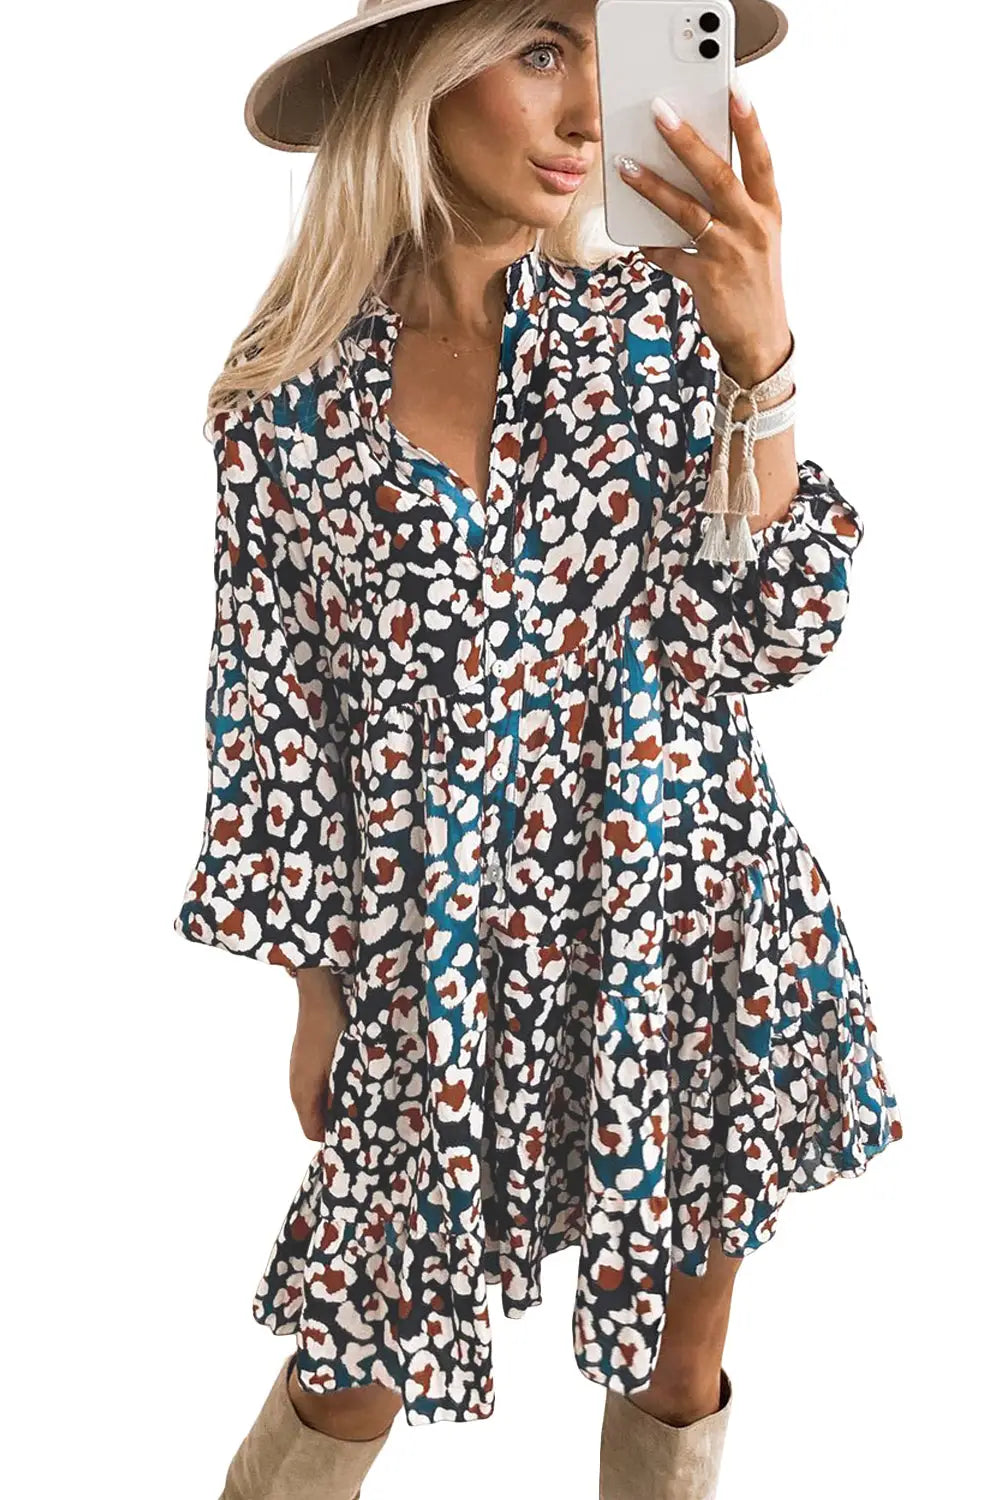 Blue leopard print bubble sleeve ruffled shirt dress - mini dresses